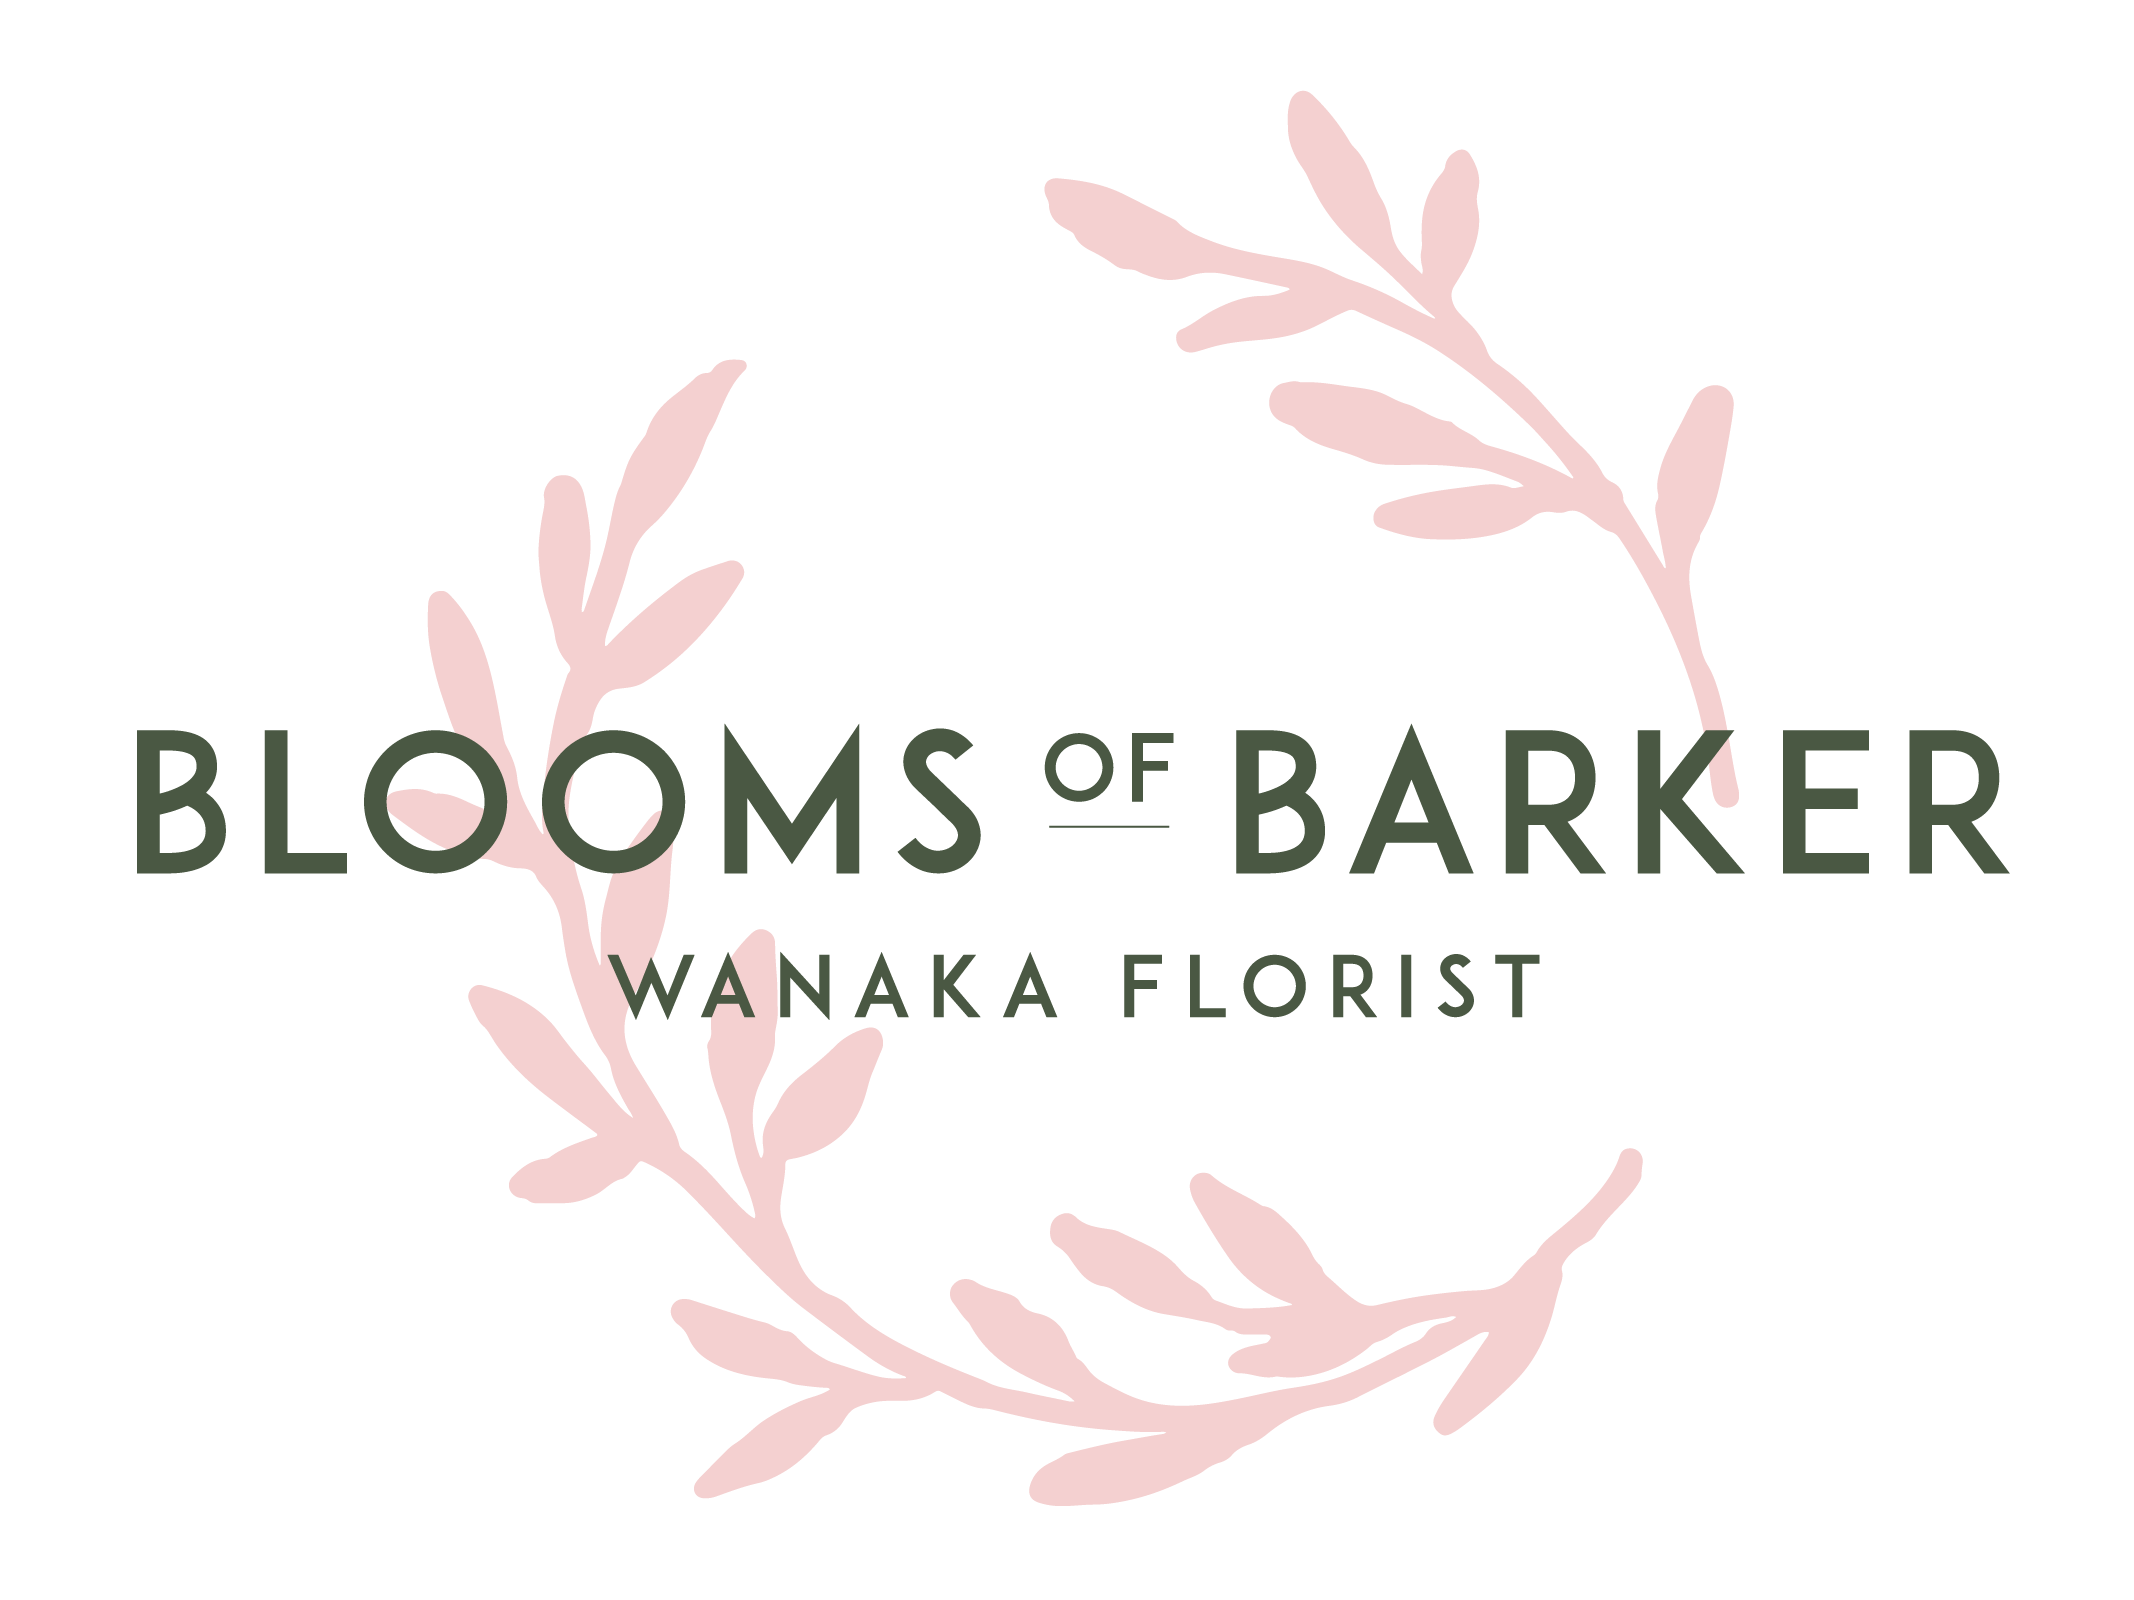 Blooms of Barker